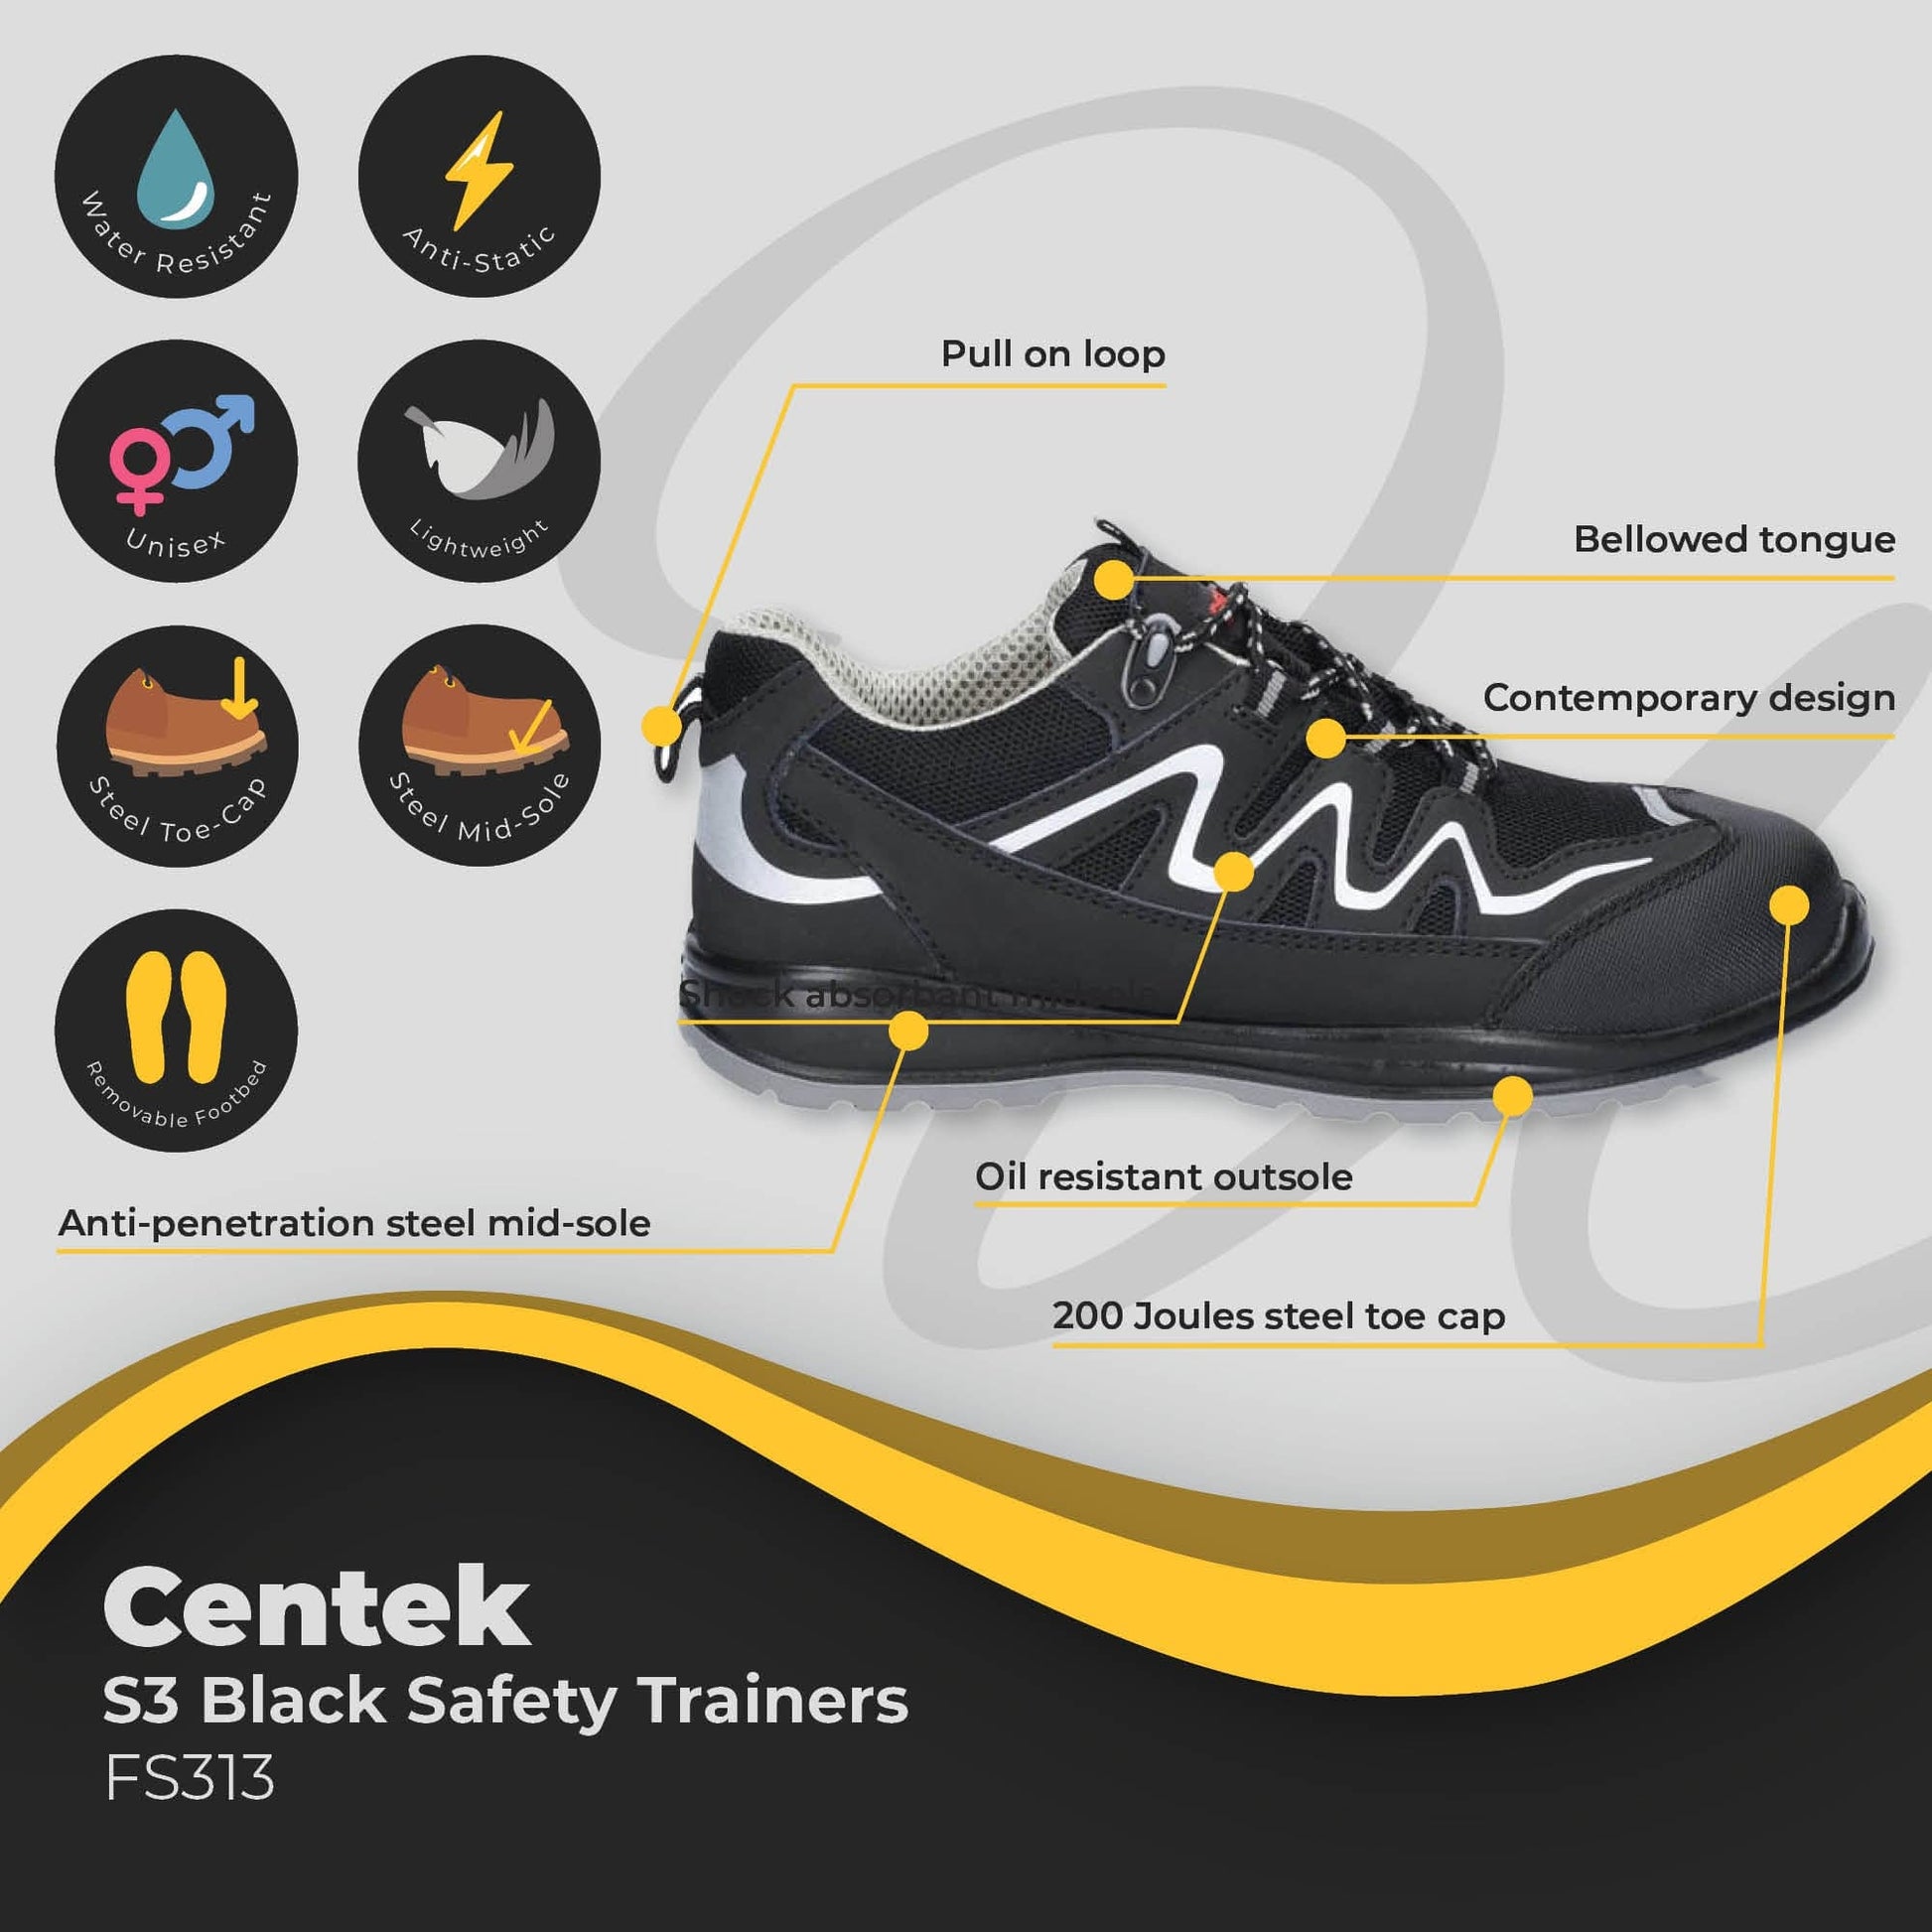 centek black safety trainer s3 fs313